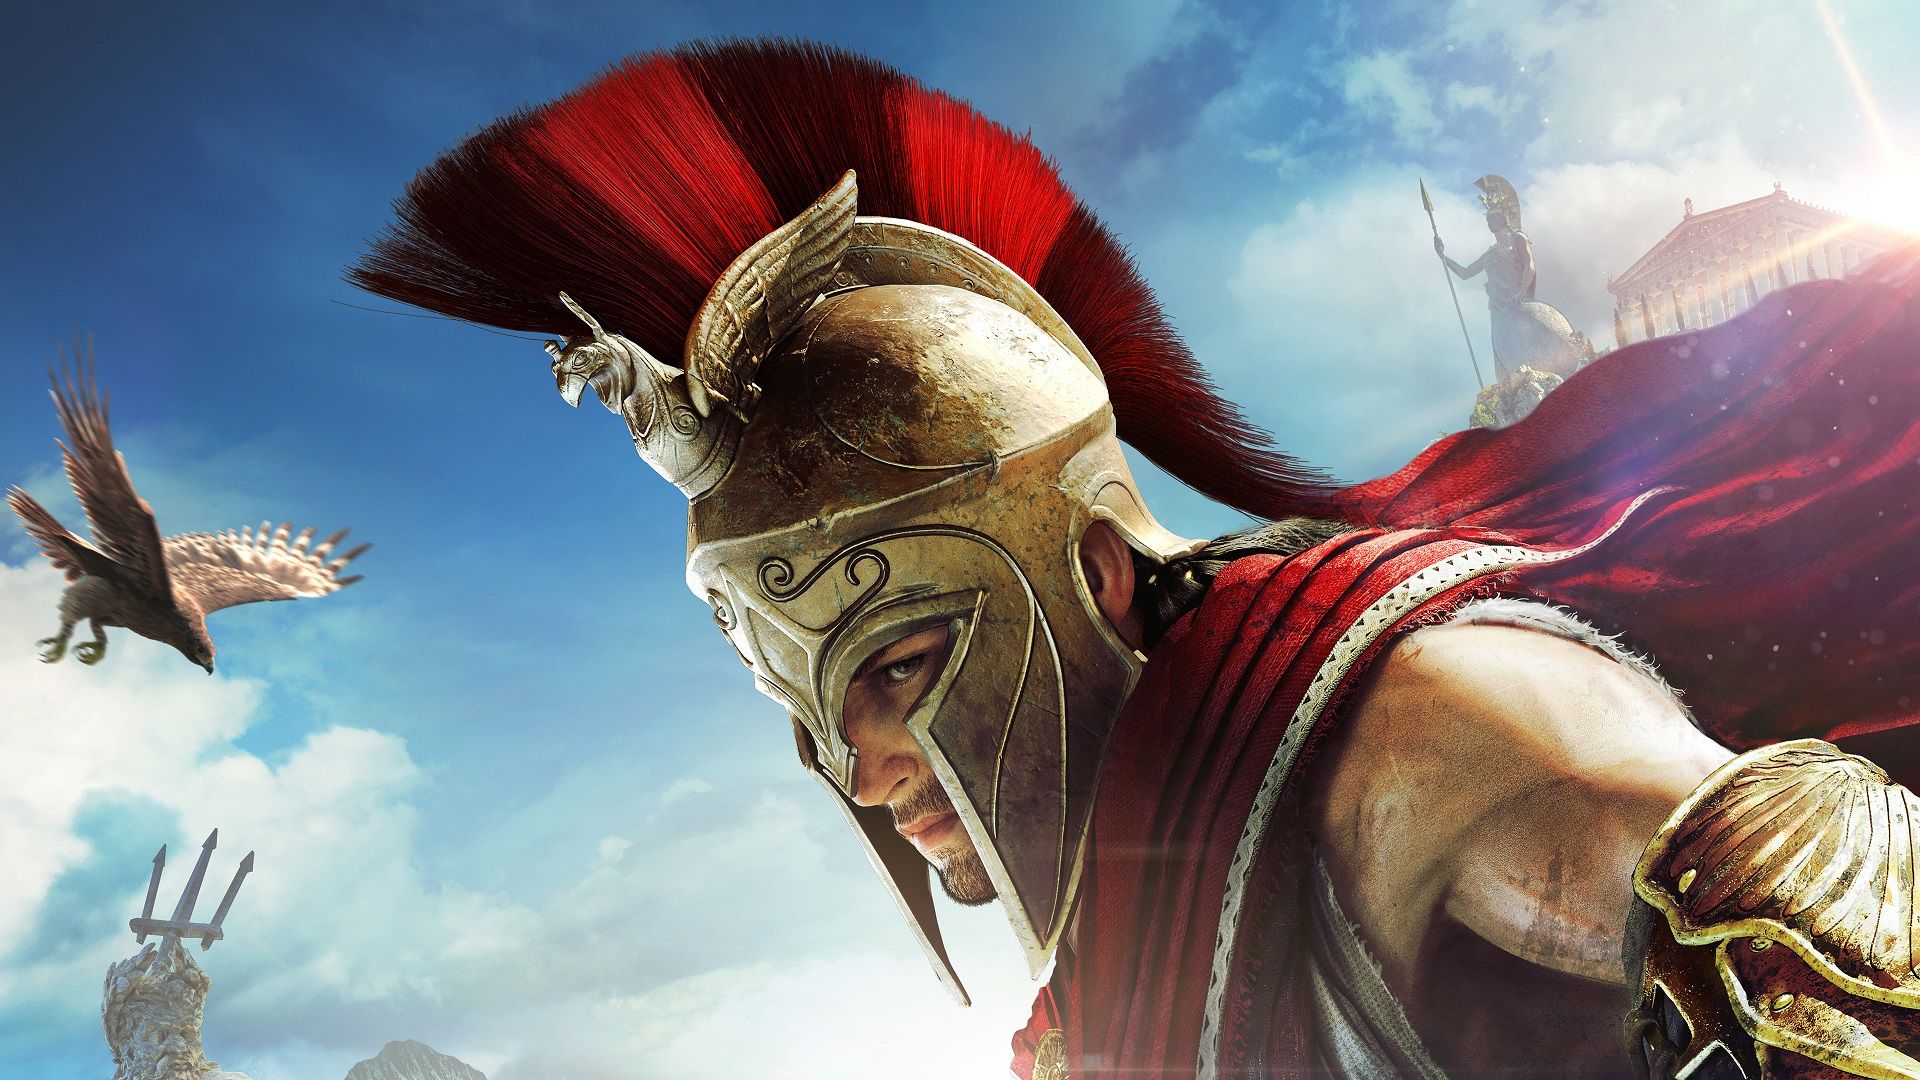 Comprar o Assassin's Creed® Odyssey